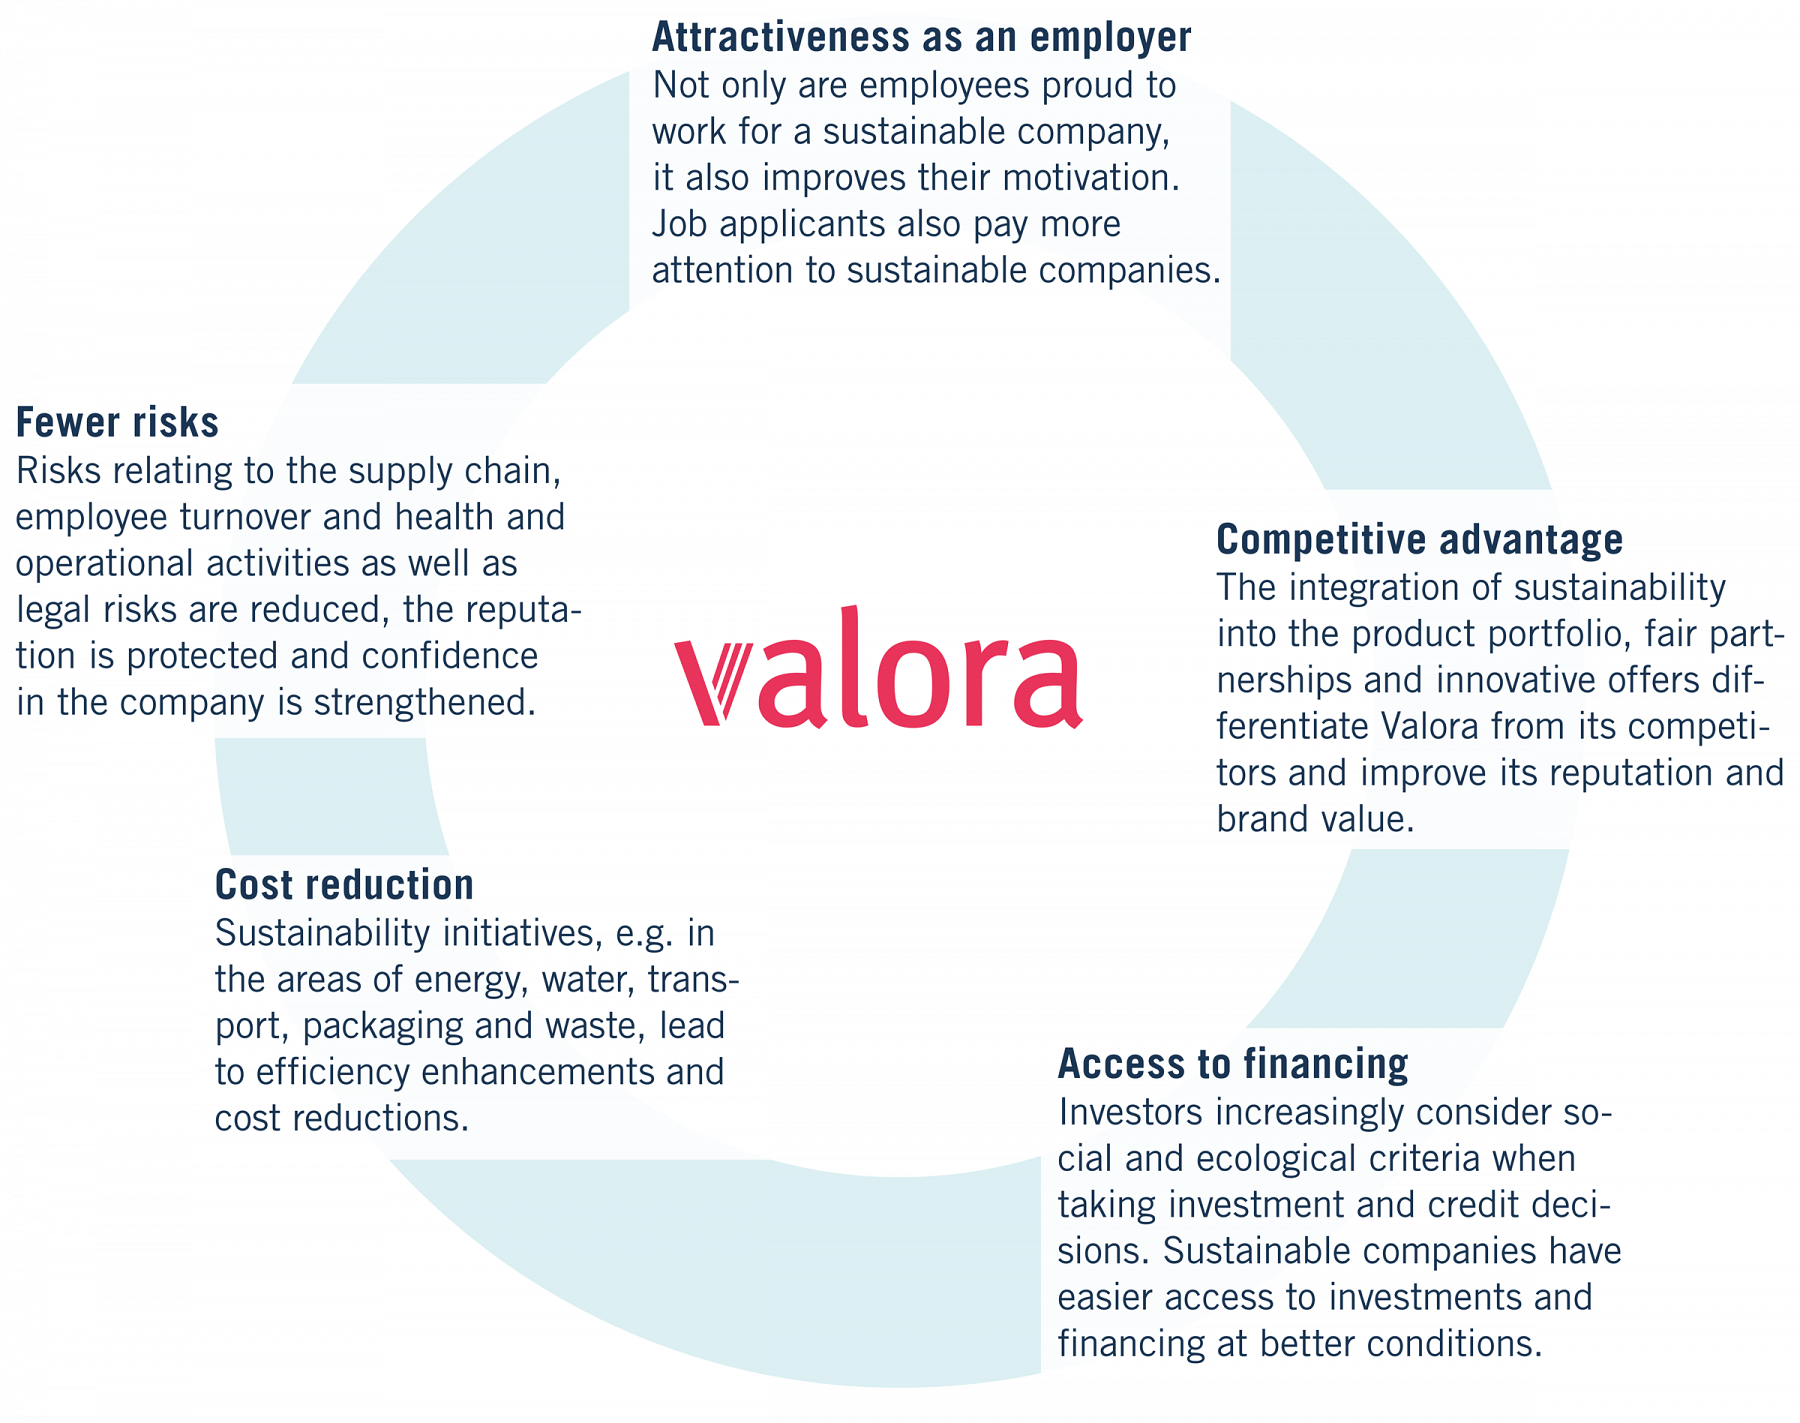 Value of sustainability for Valora